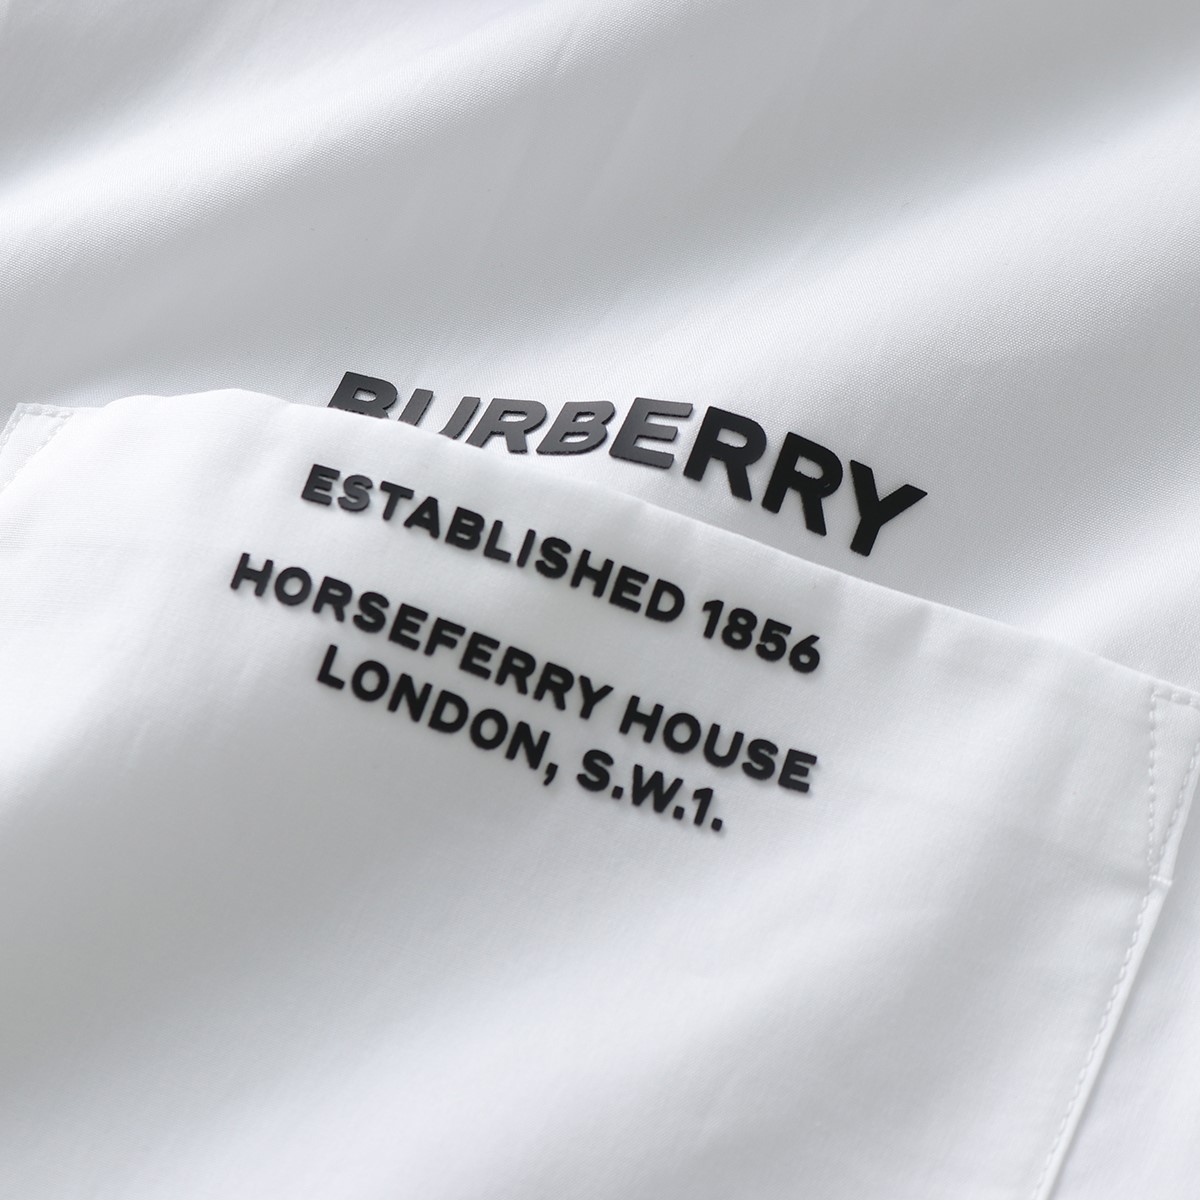 BURBERRY バーバリー シャツ 8050263 メンズ 長袖 コットン ストレッチ ホースフェリー プリント A1464/WHITE |  インポートセレクト musee